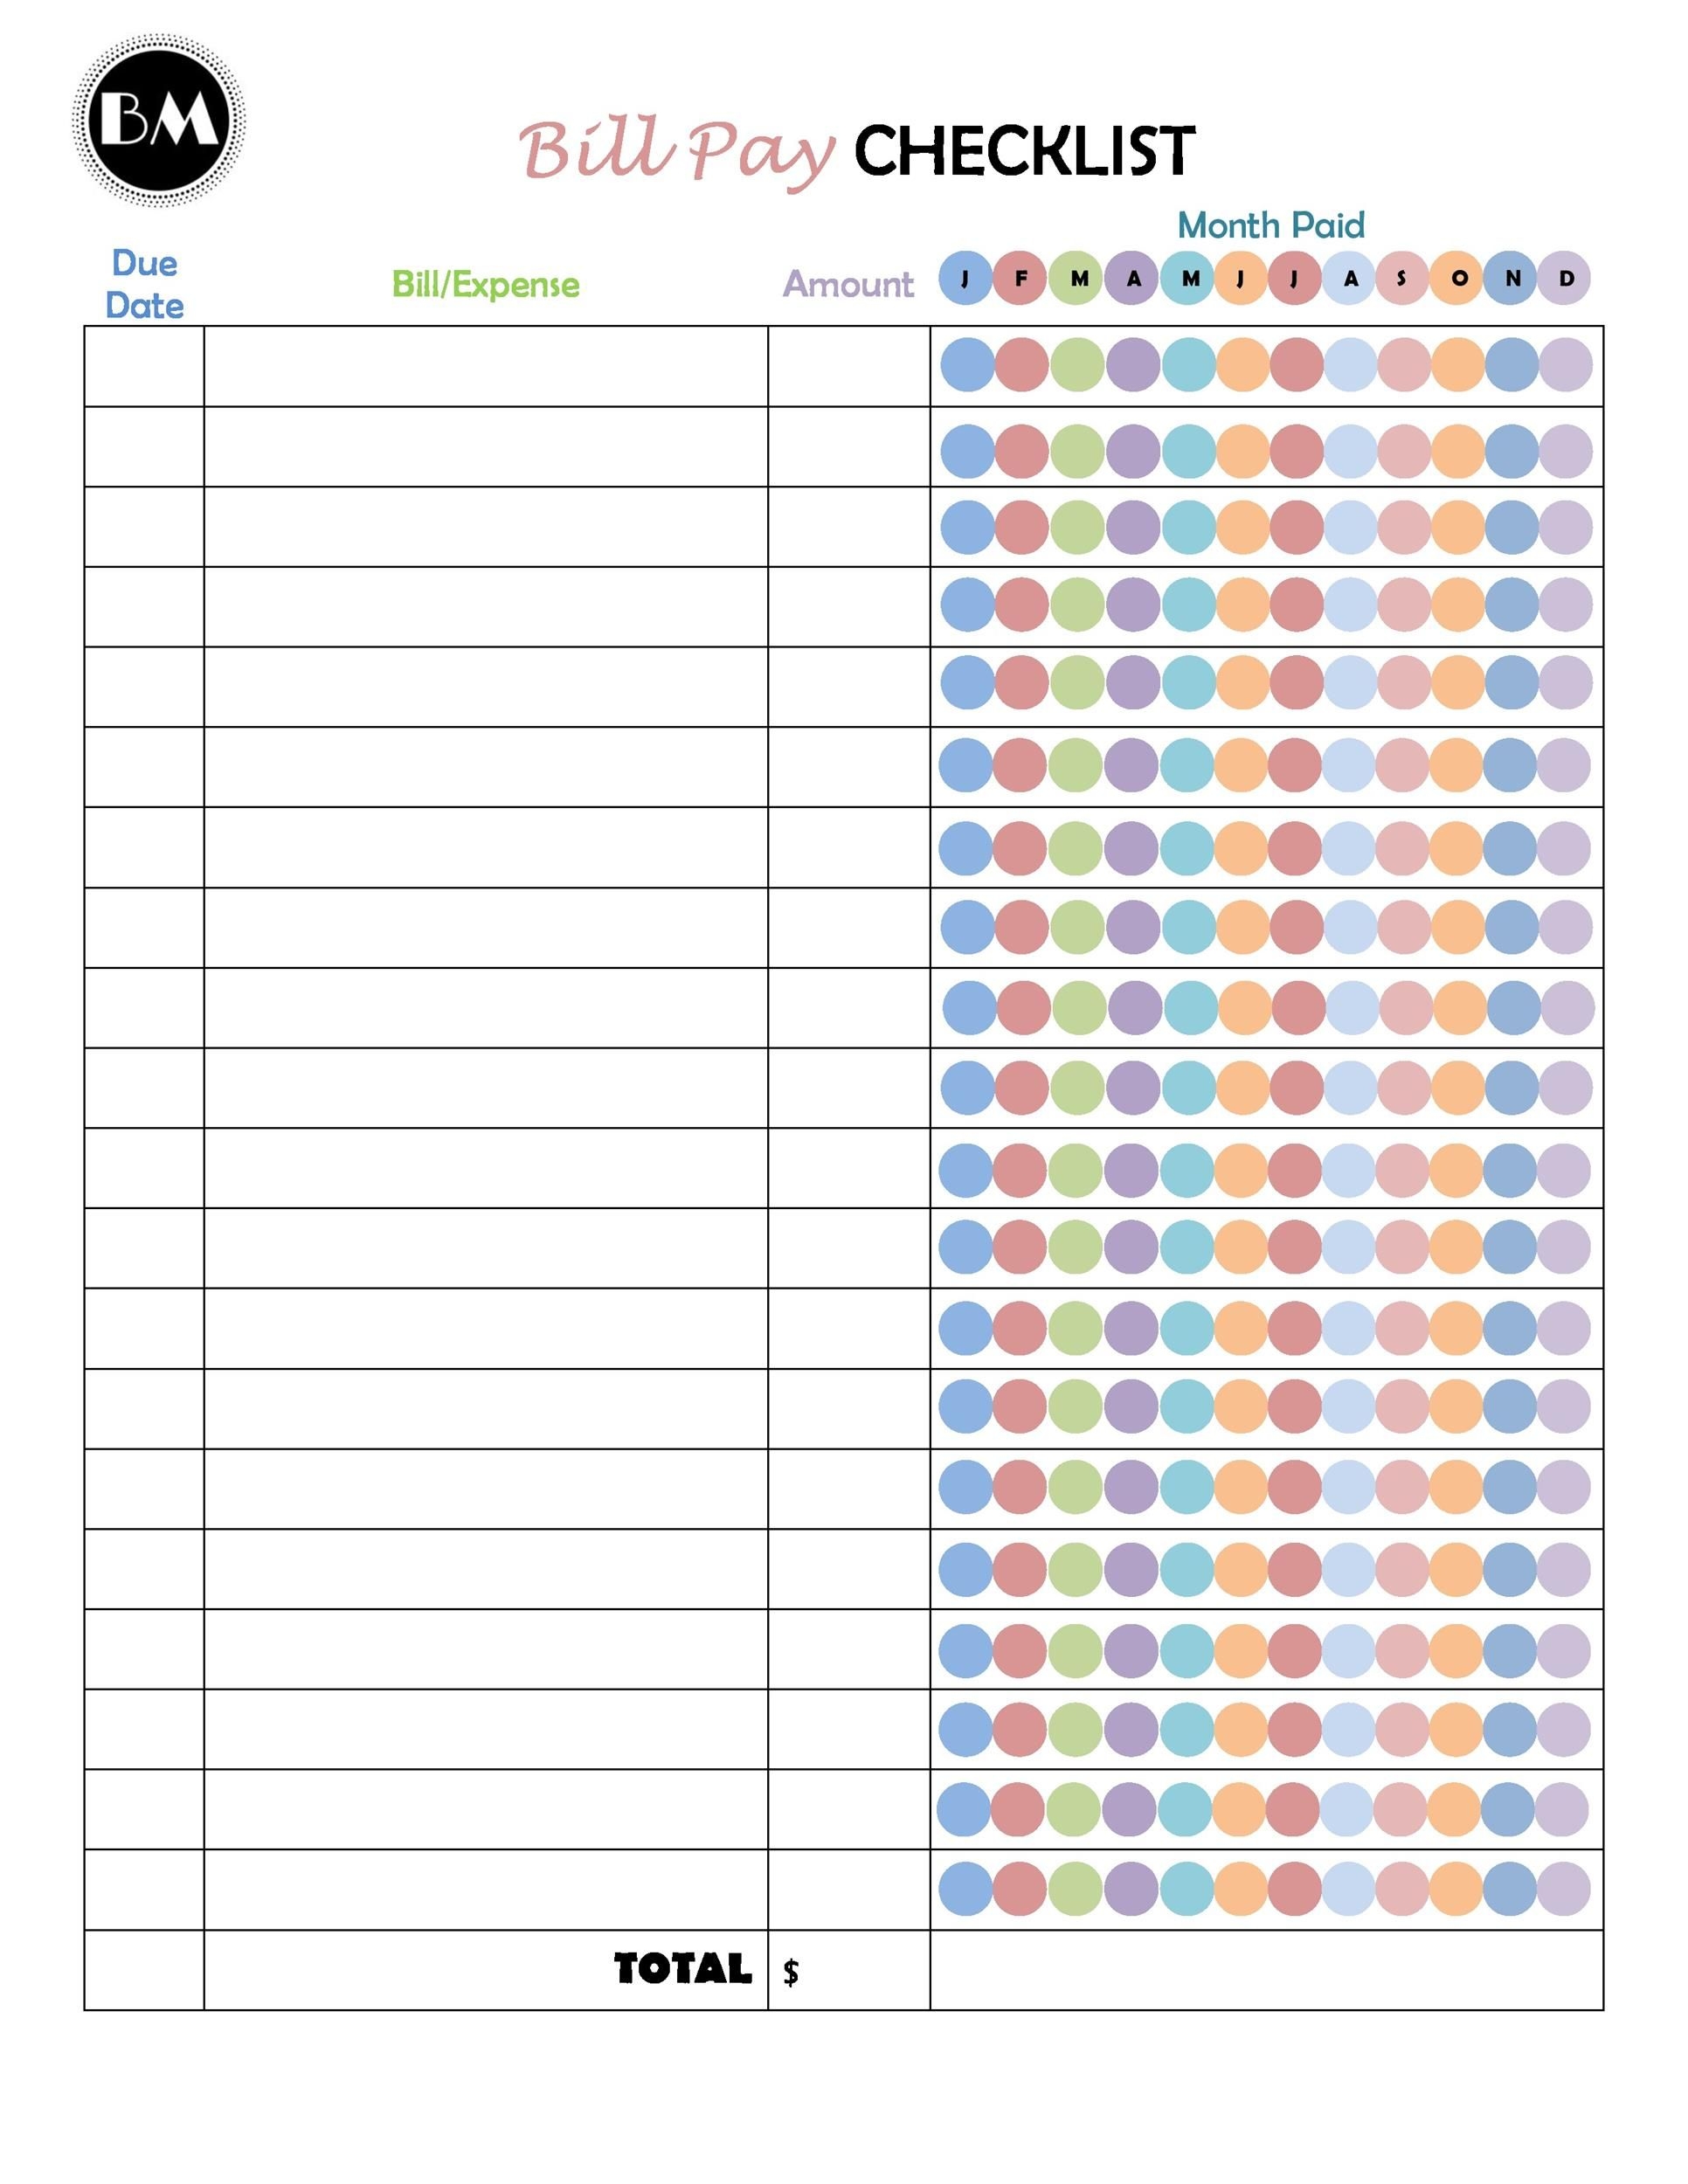 33 free bill pay checklists &amp; bill calendars (pdf, word &amp; excel)